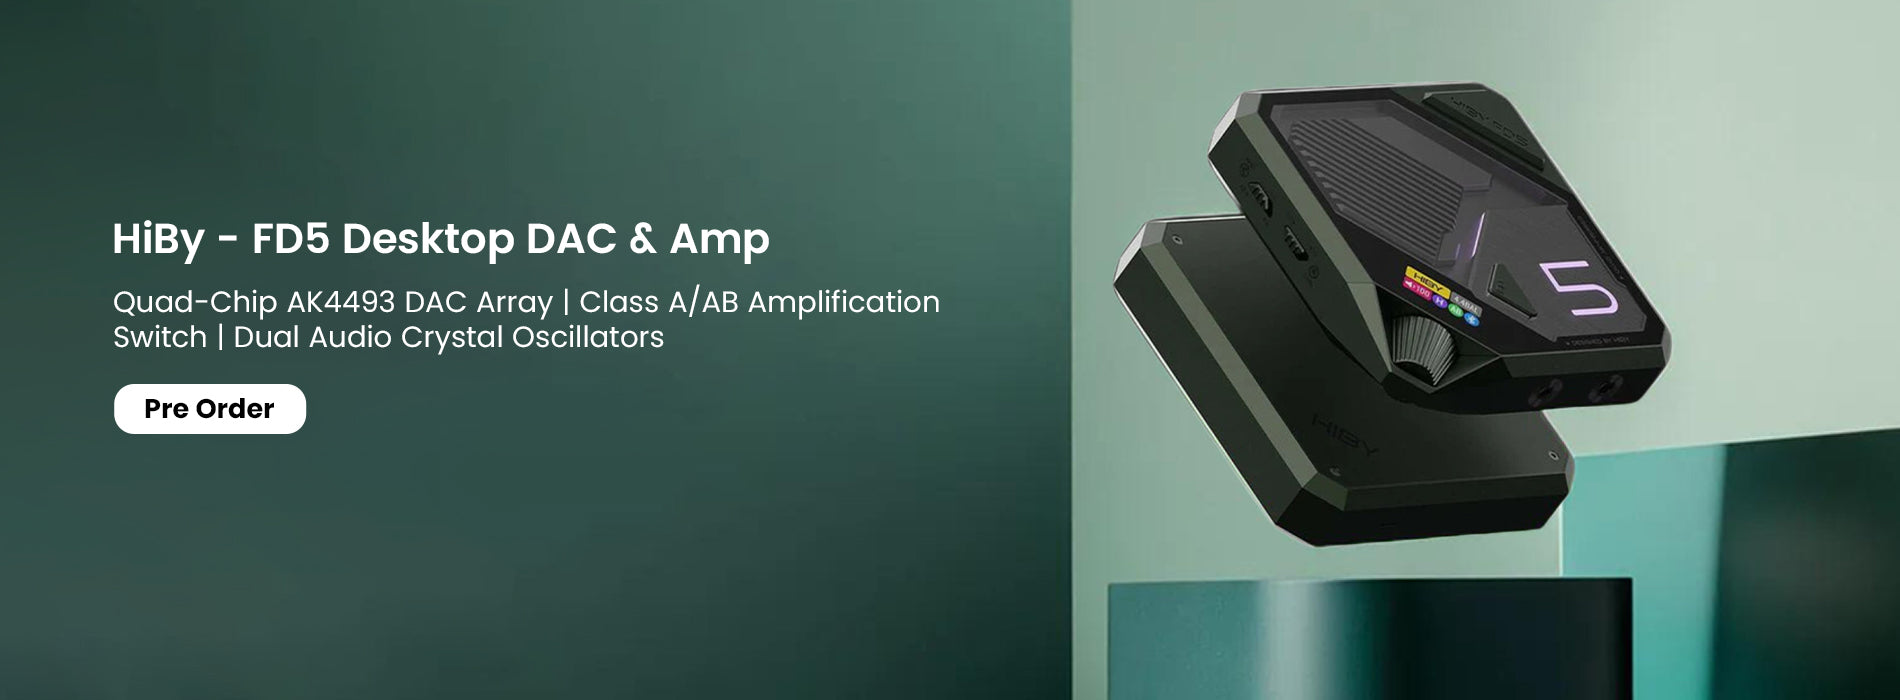 HiBy - FD5 Desktop DAC Amp